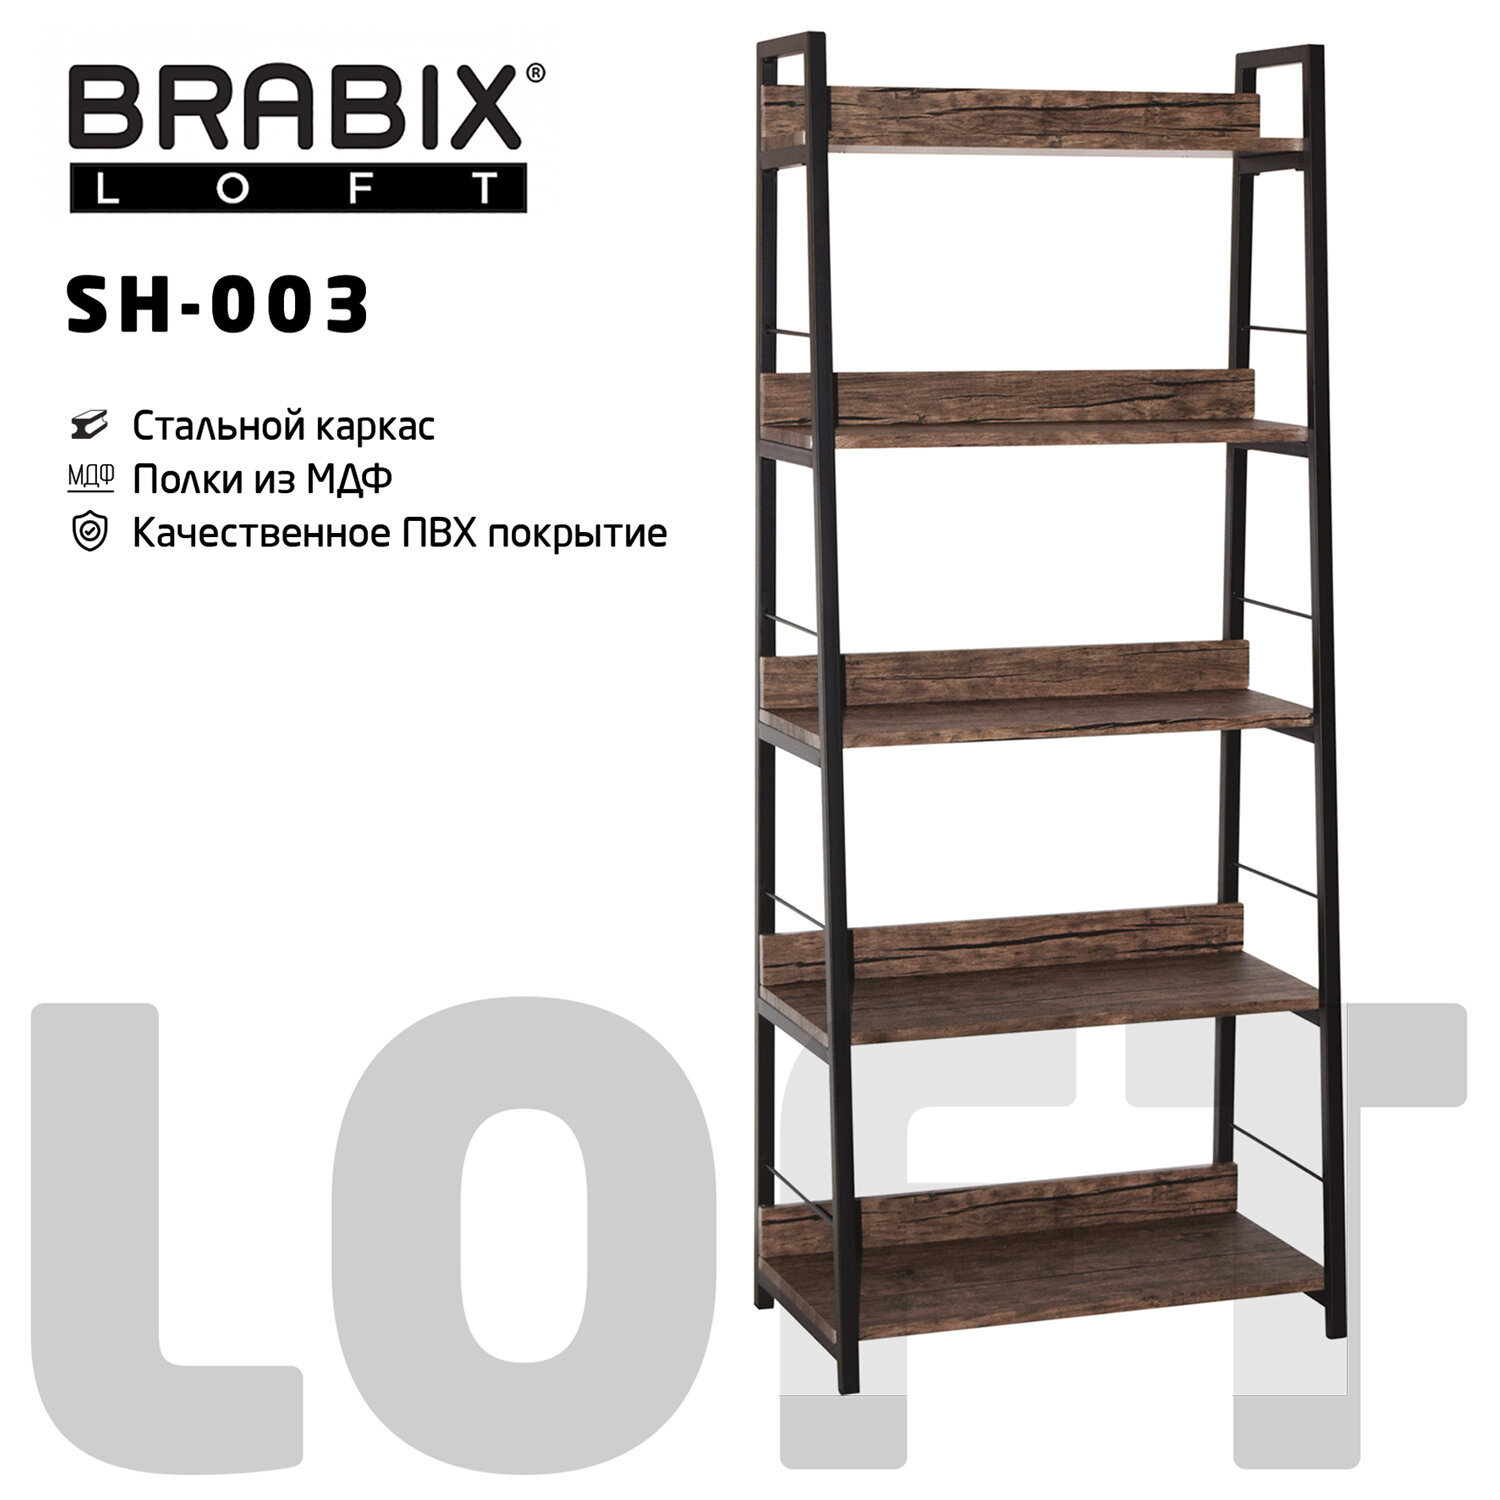 Brabix Стеллаж на металлокаркасе BRABIX LOFT SH-003, 600х350х1500 мм, 5 полок, цвет морёный дуб, 641234